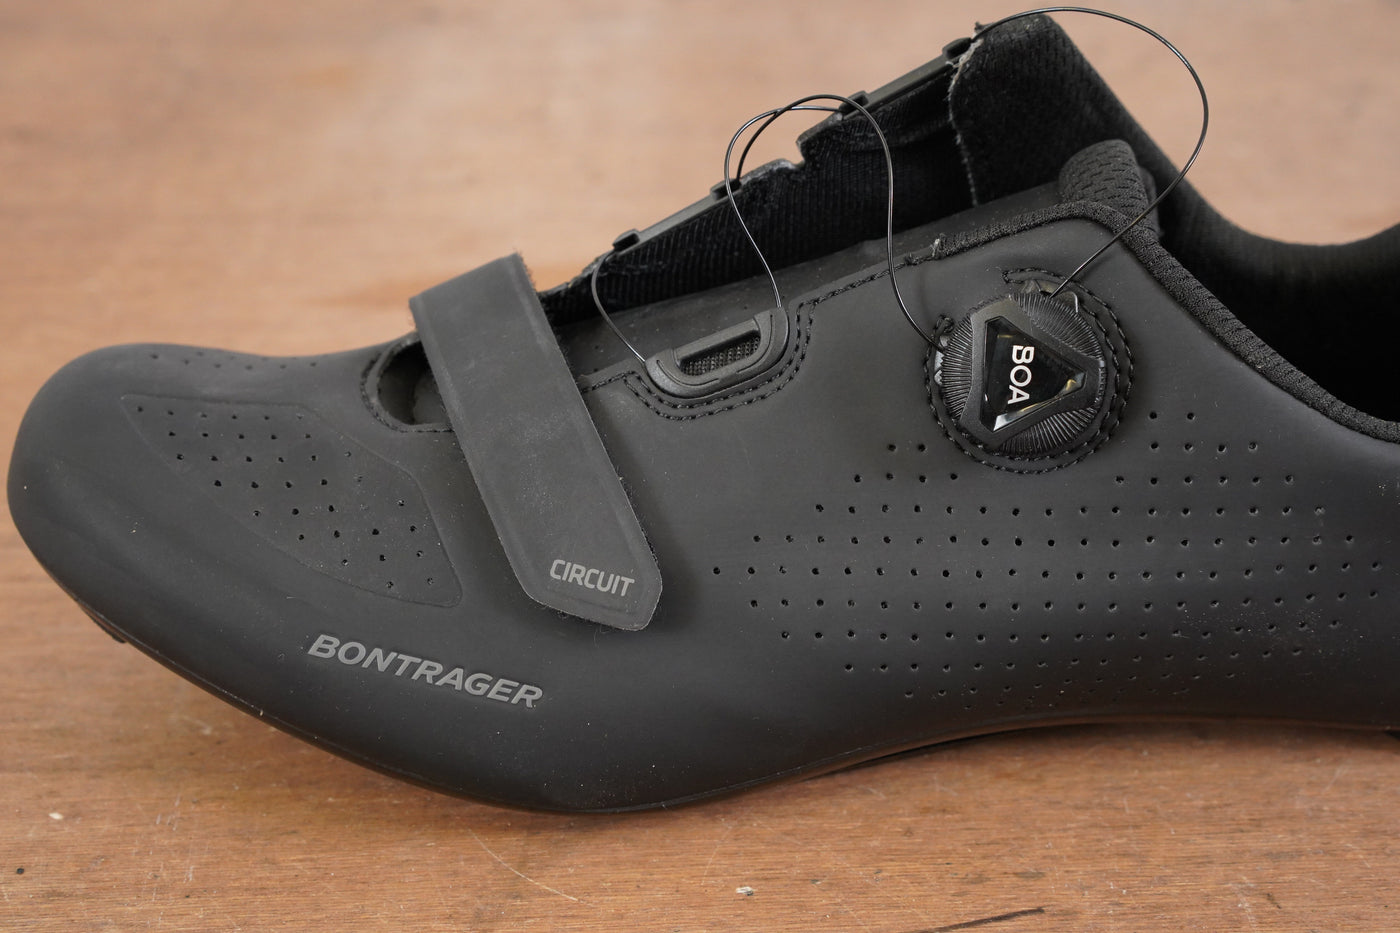 NEW Size 48 (EU) Bontrager Circuit BOA Road Cycling Shoe 3-Bolt